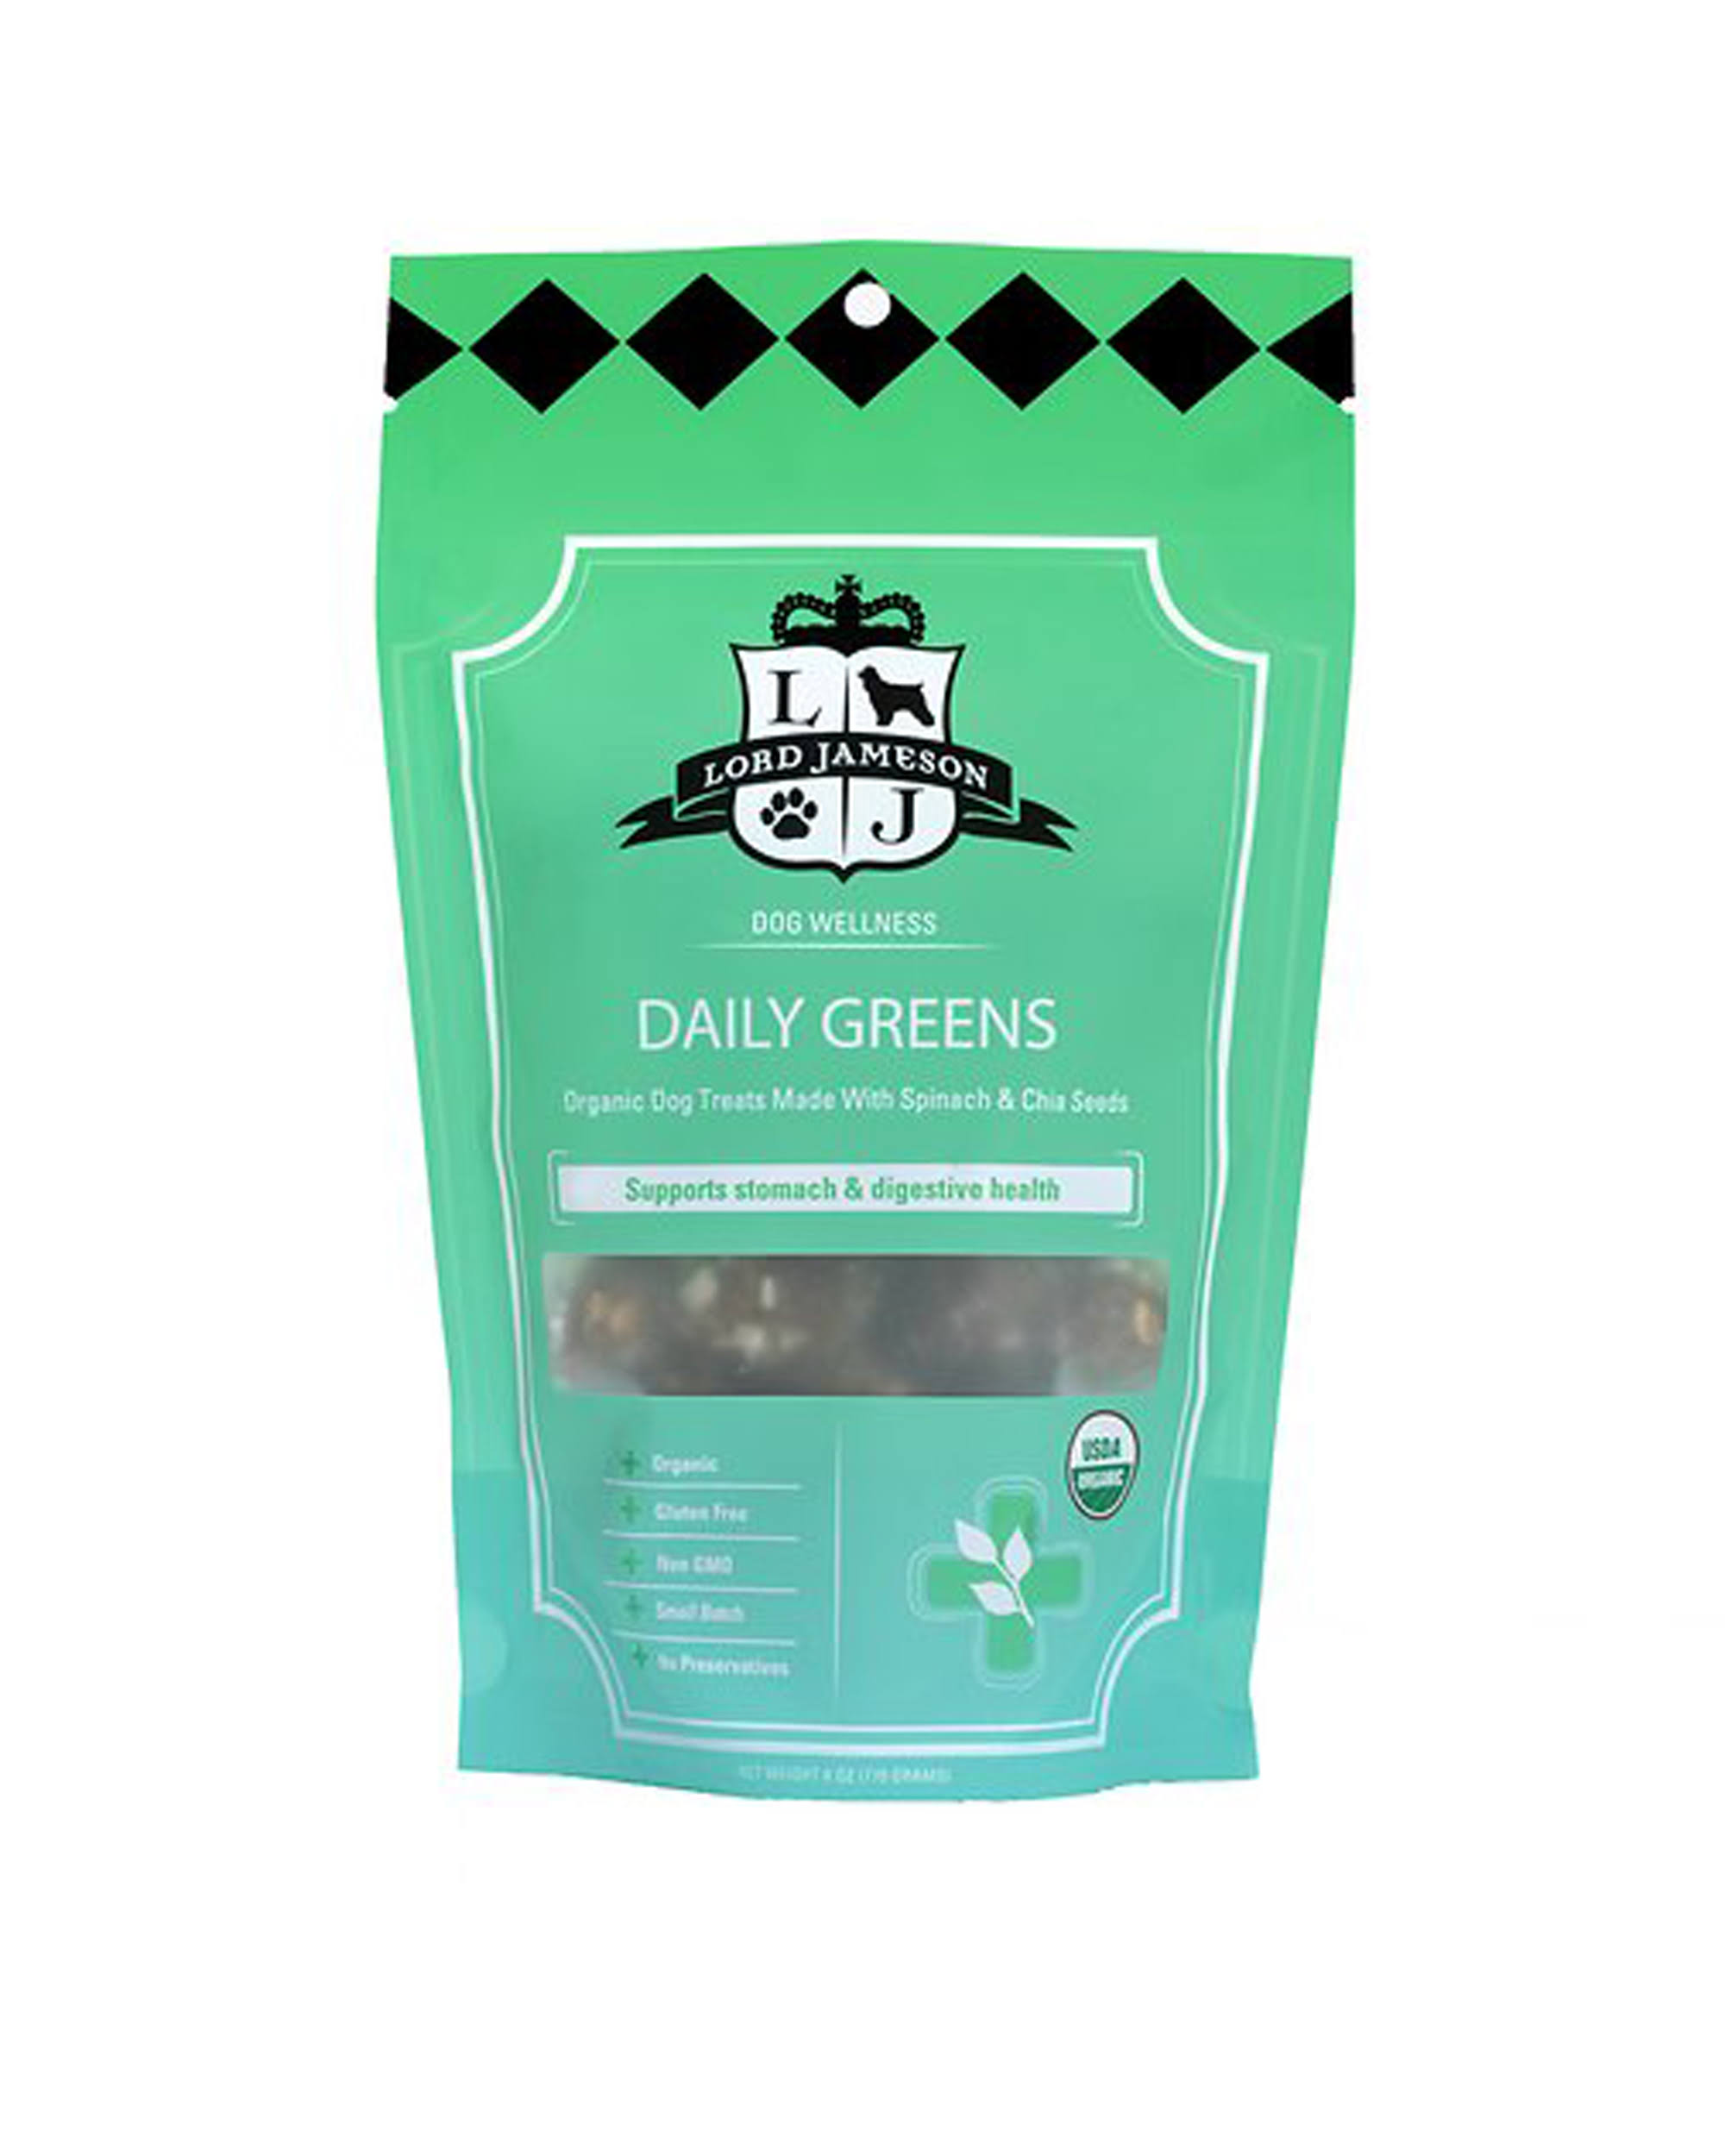 Lord Jameson Daily Greens Dog Treats - 6 oz